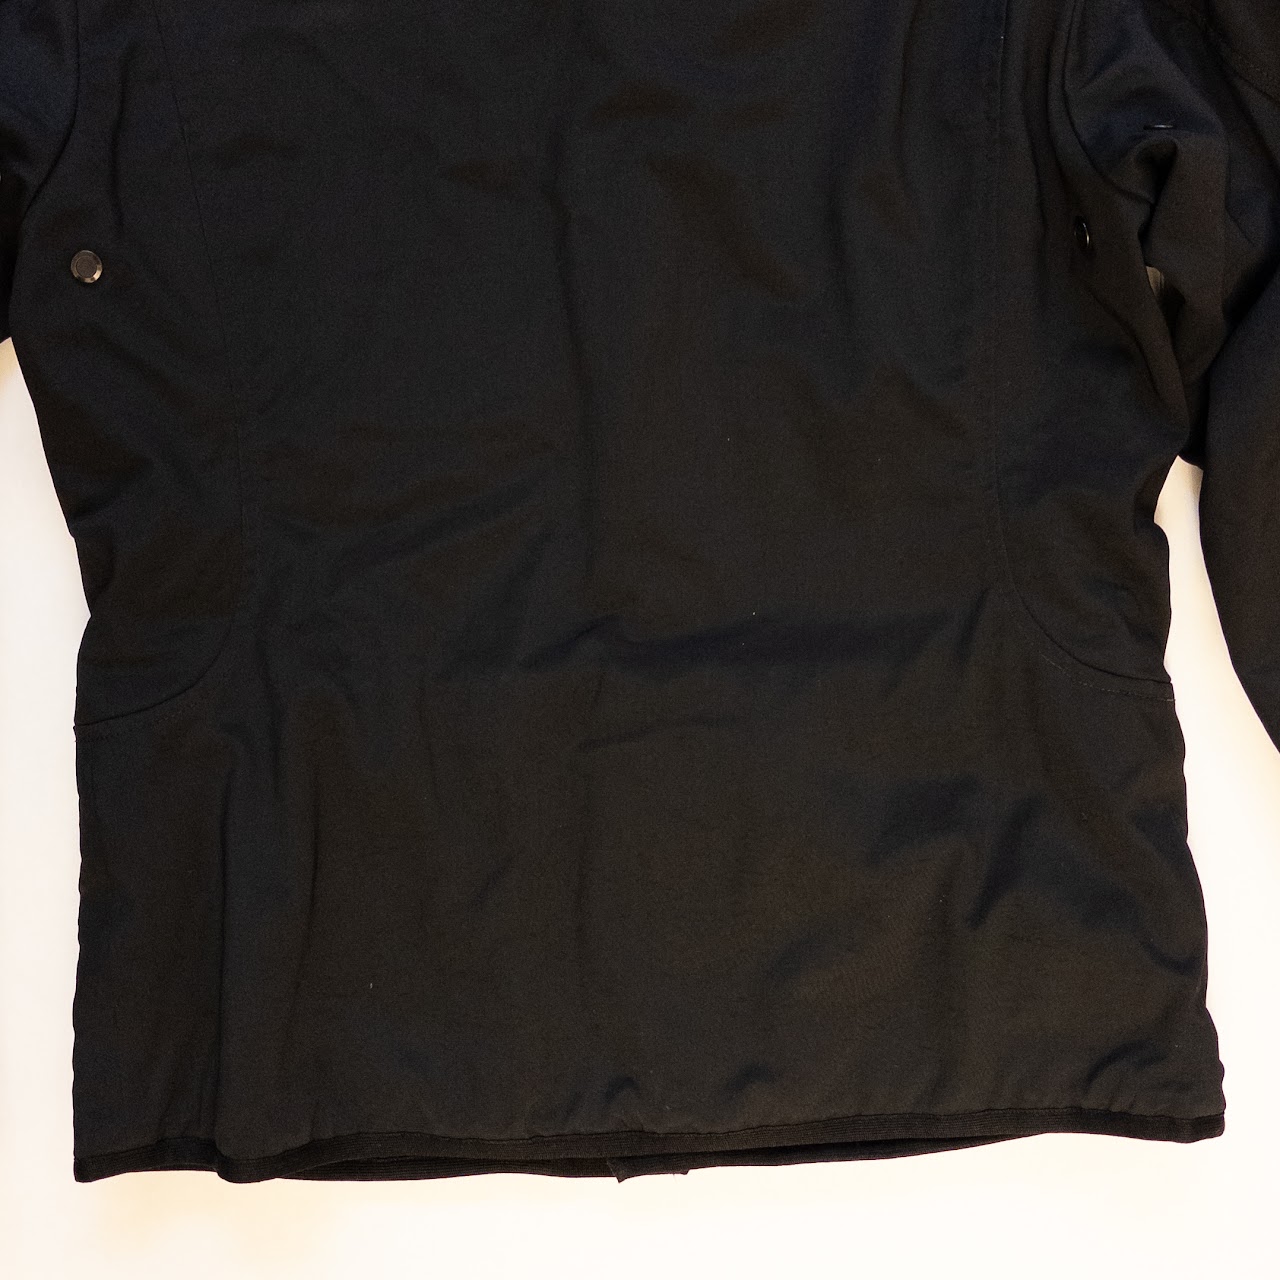 Prada Fleece-Lined Travel Jacket